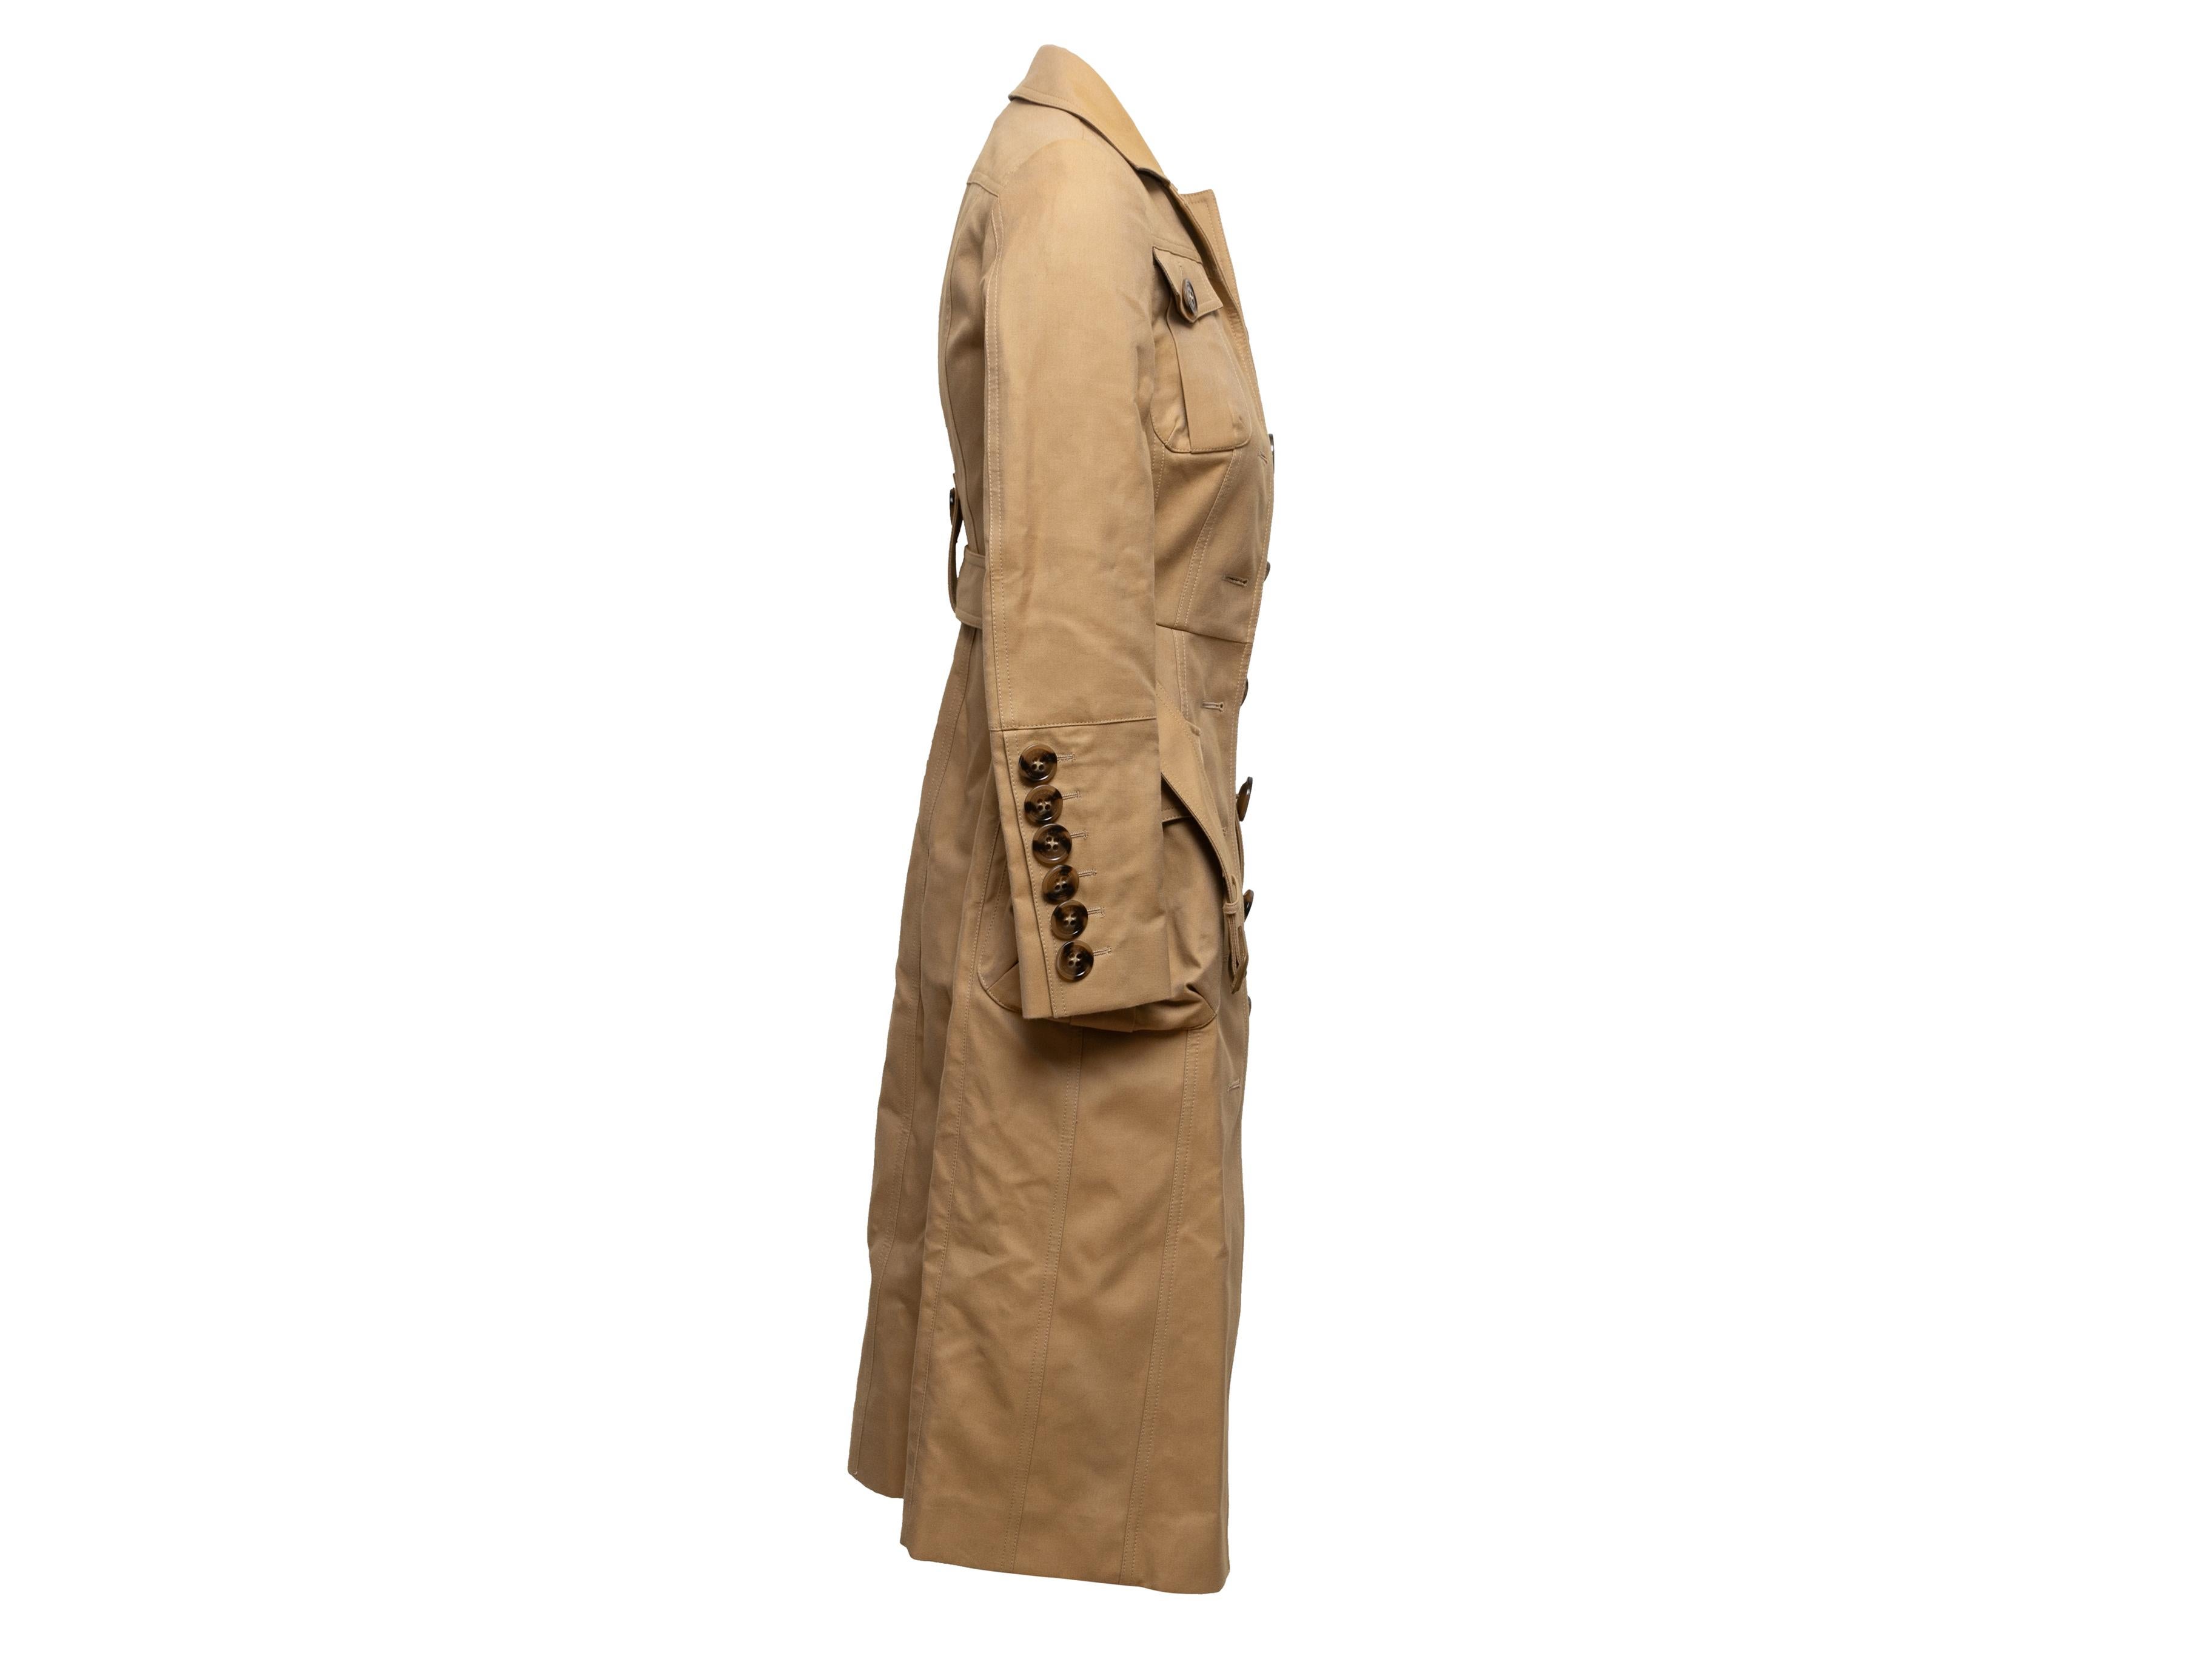 Women's Tan Burberry Prorsum Belted Trench Coat Size EU 34